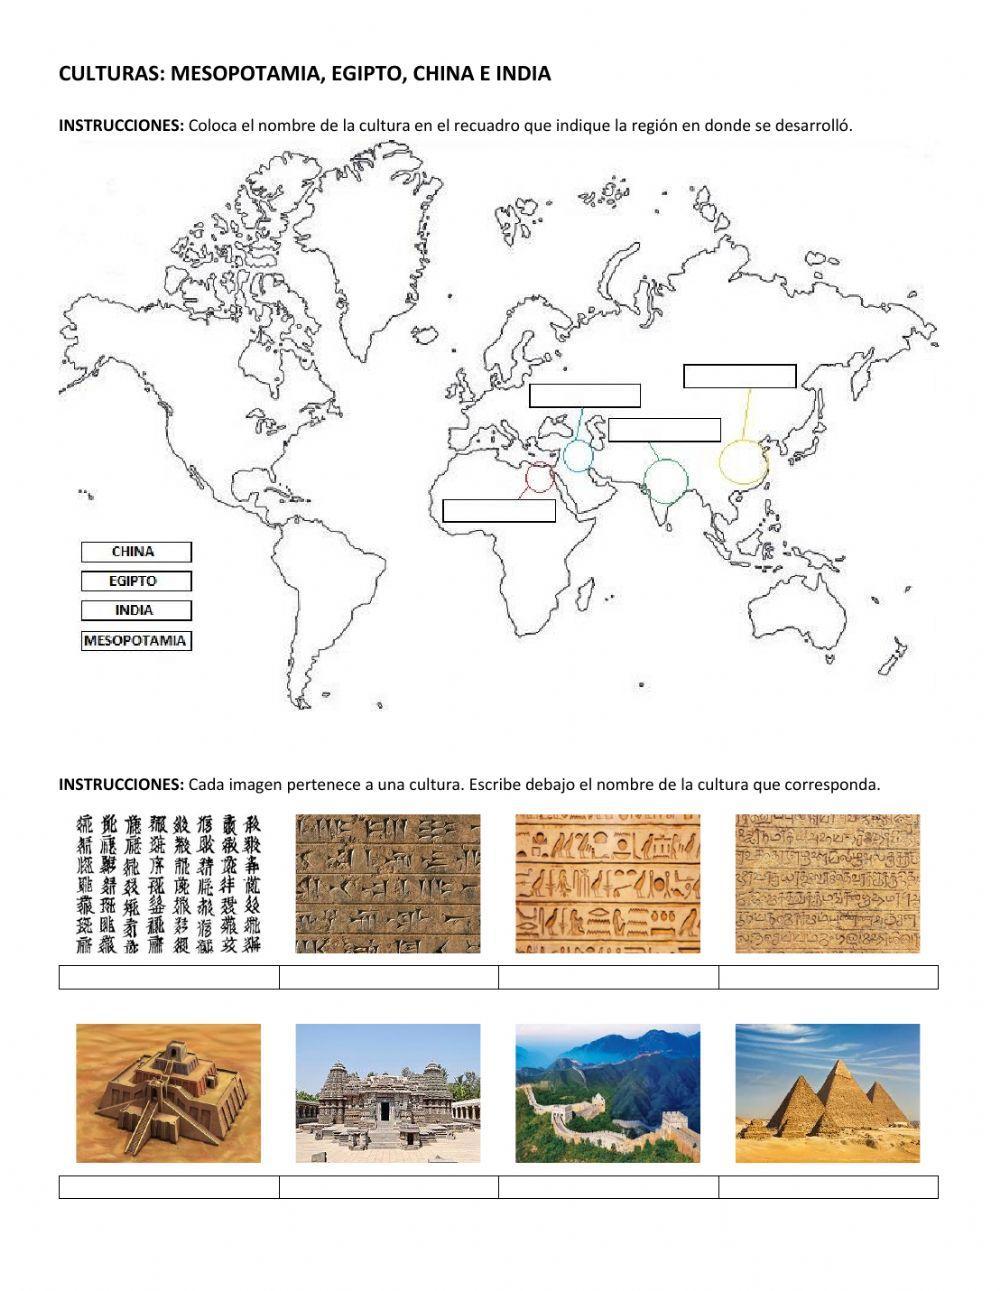 Culturas: Mesopotamia, Egipto, China e India